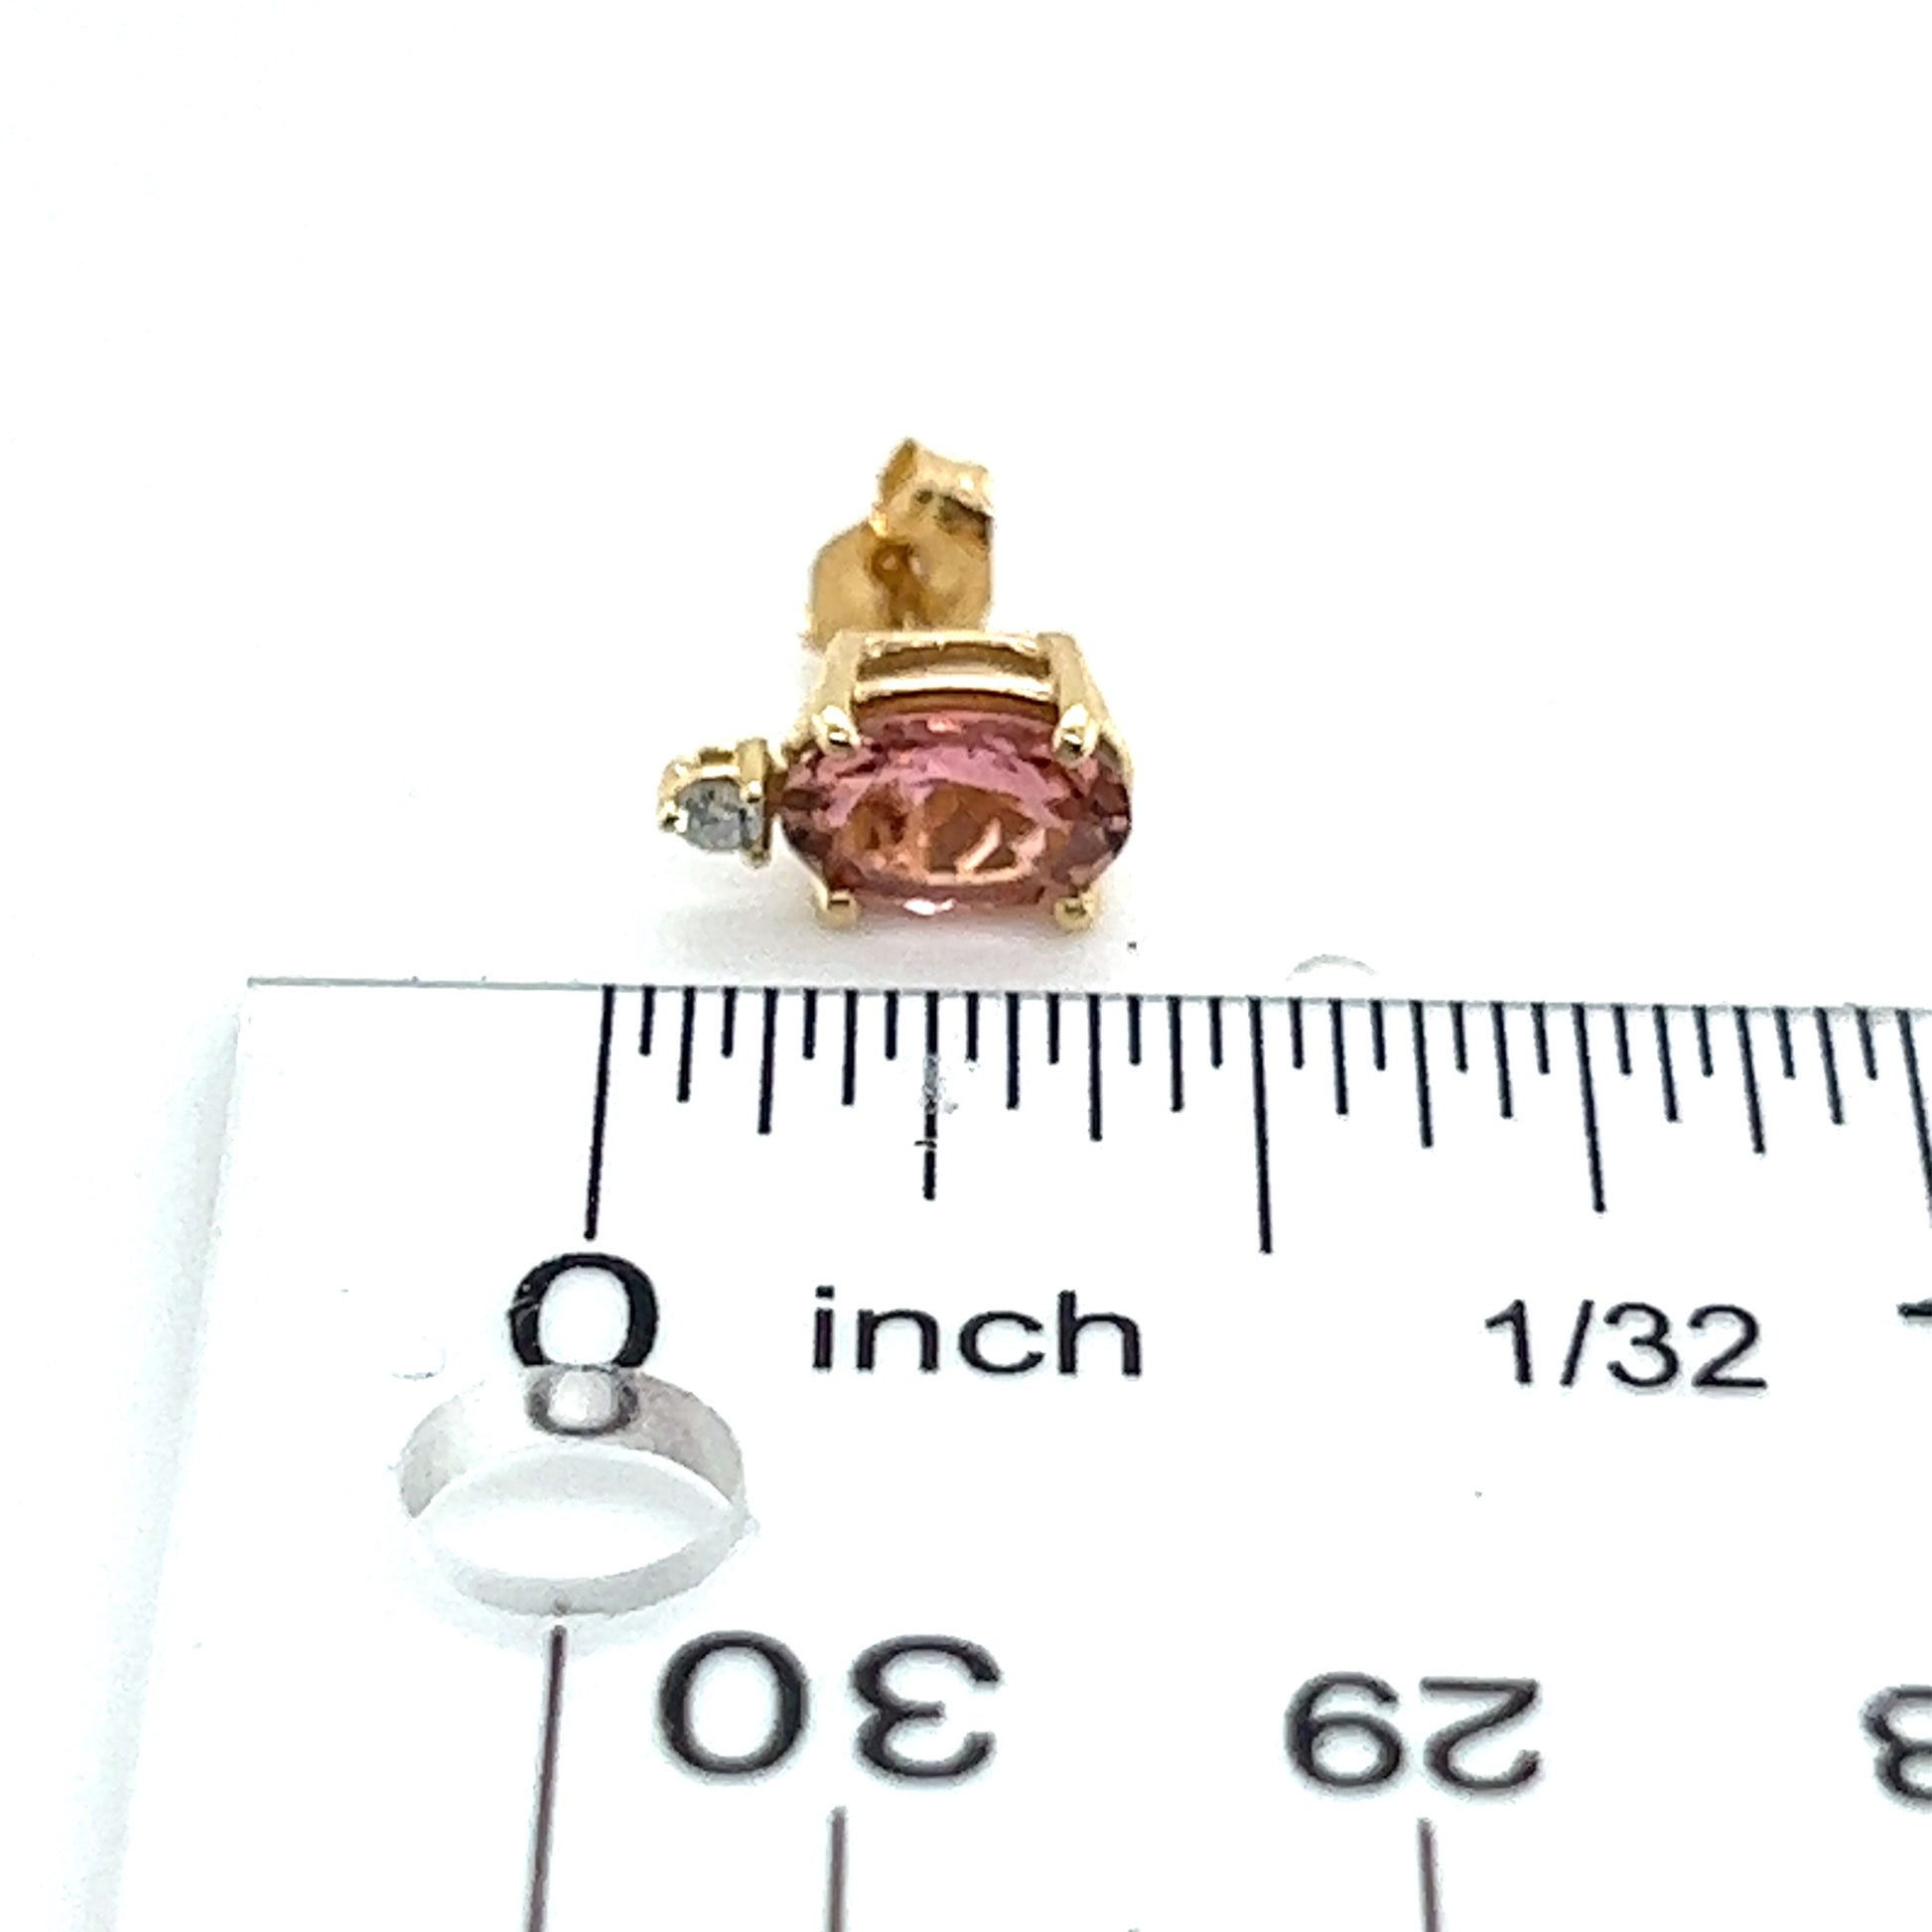 Natural Tourmaline Diamond Stud Earrings 14k Y Gold 2.01 TCW Certified $1,690 121432